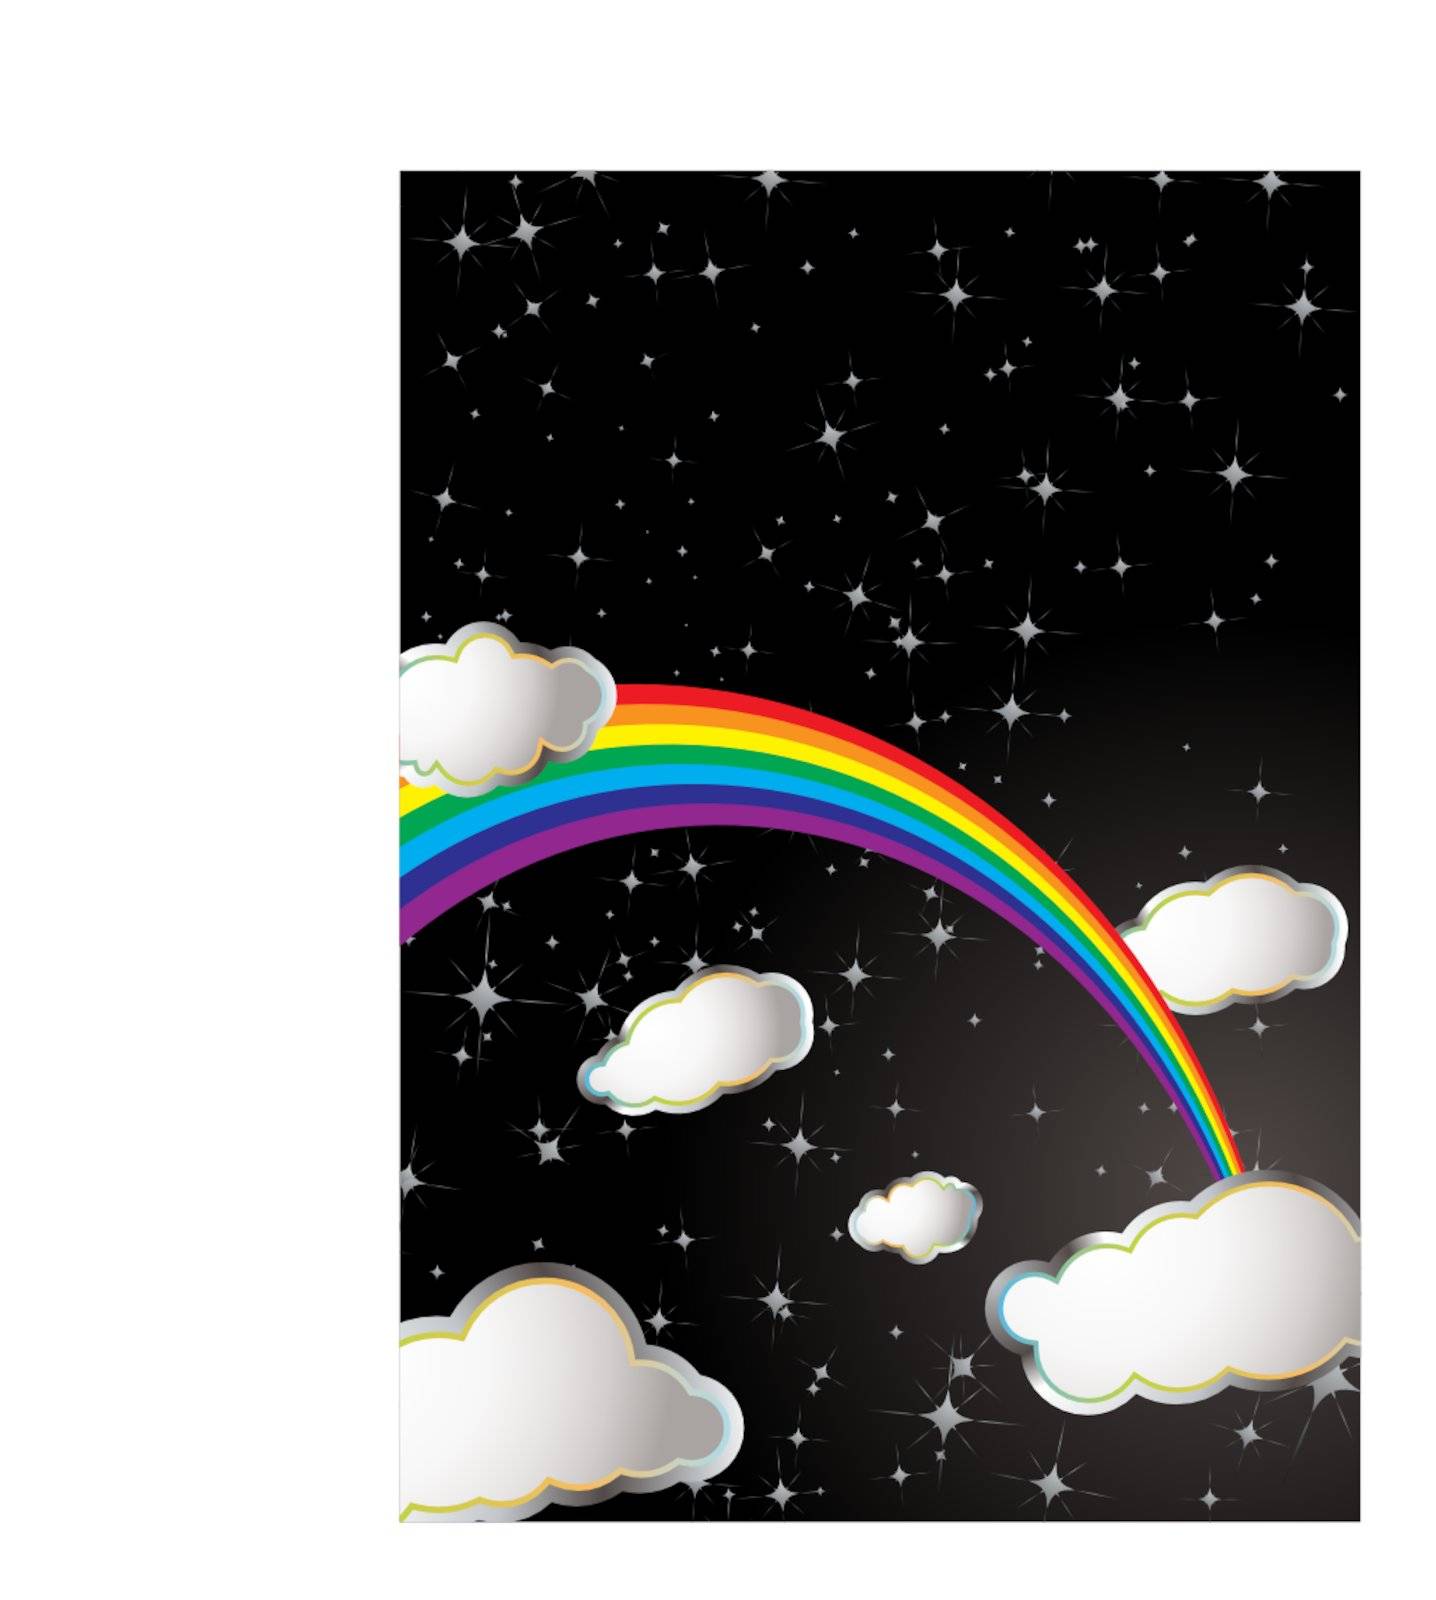 space rainbow by nicemonkey